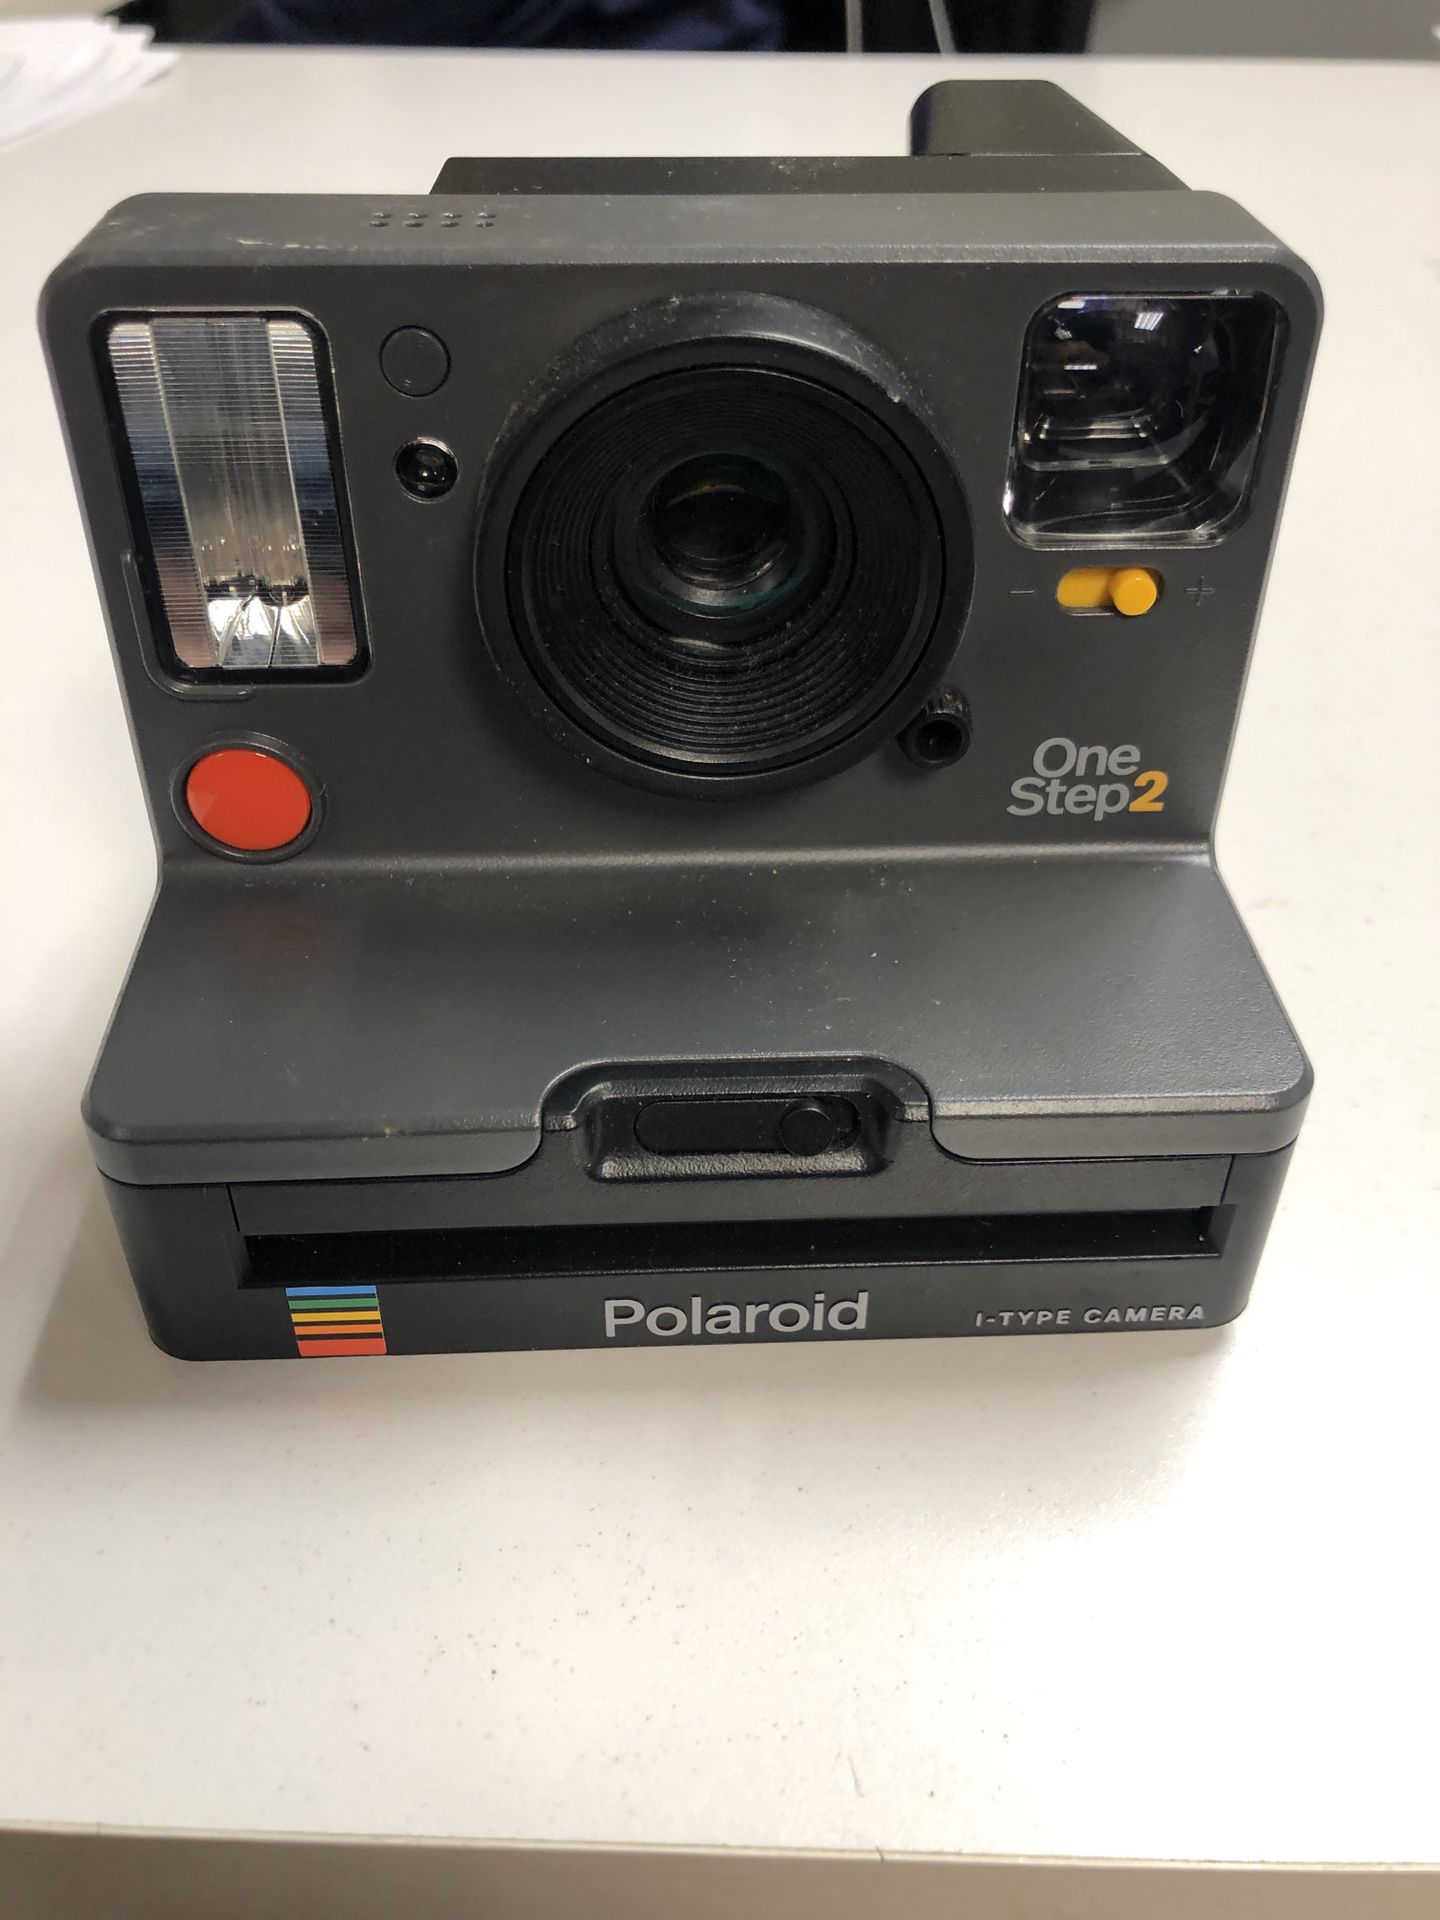 Polaroid one step2 camera